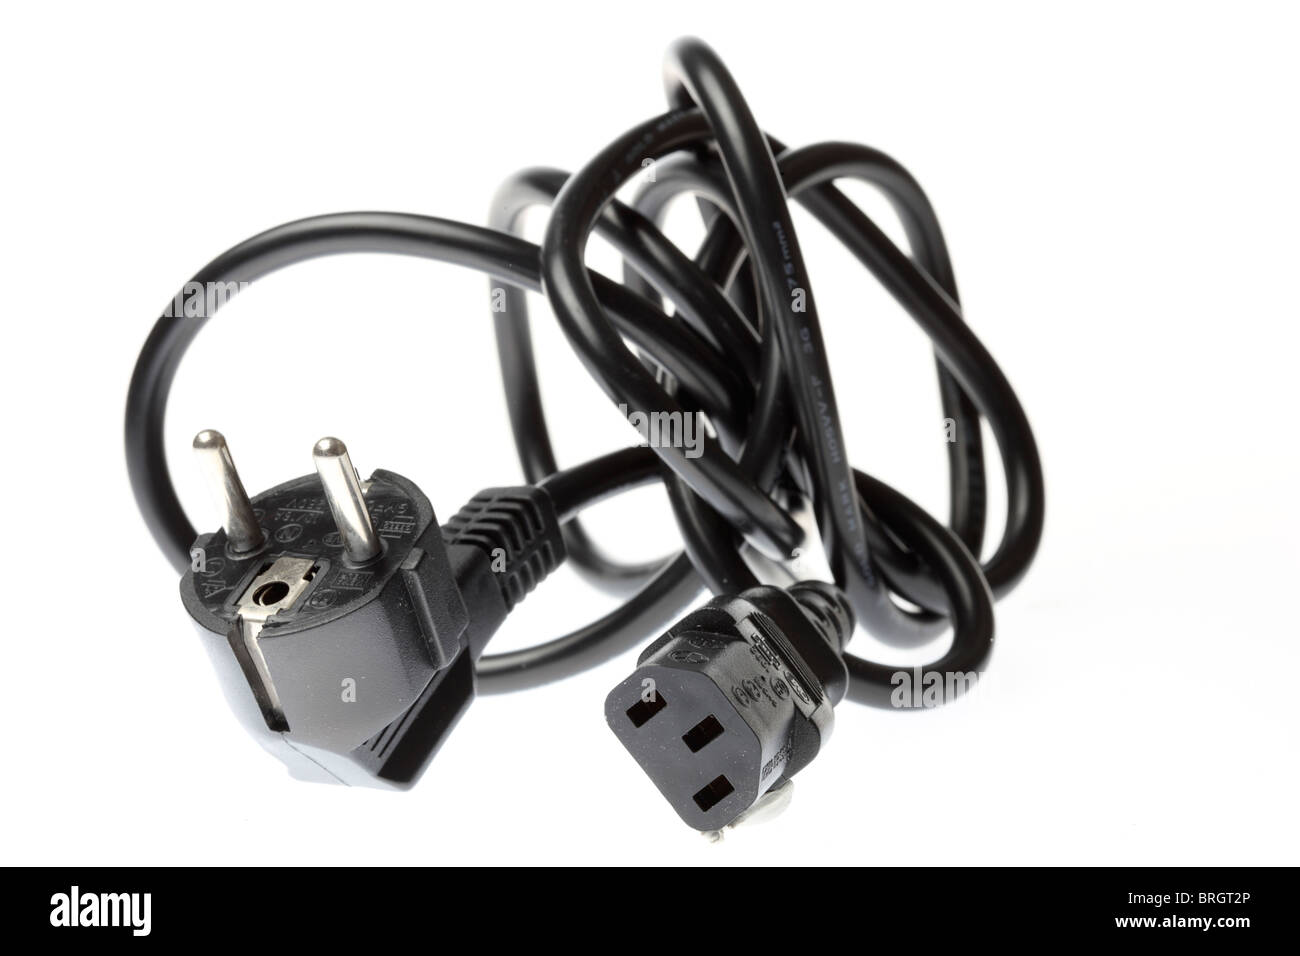 Cable de Audio con Micro 5m Negro Alargador Mini Jack 3.5mm OMTP